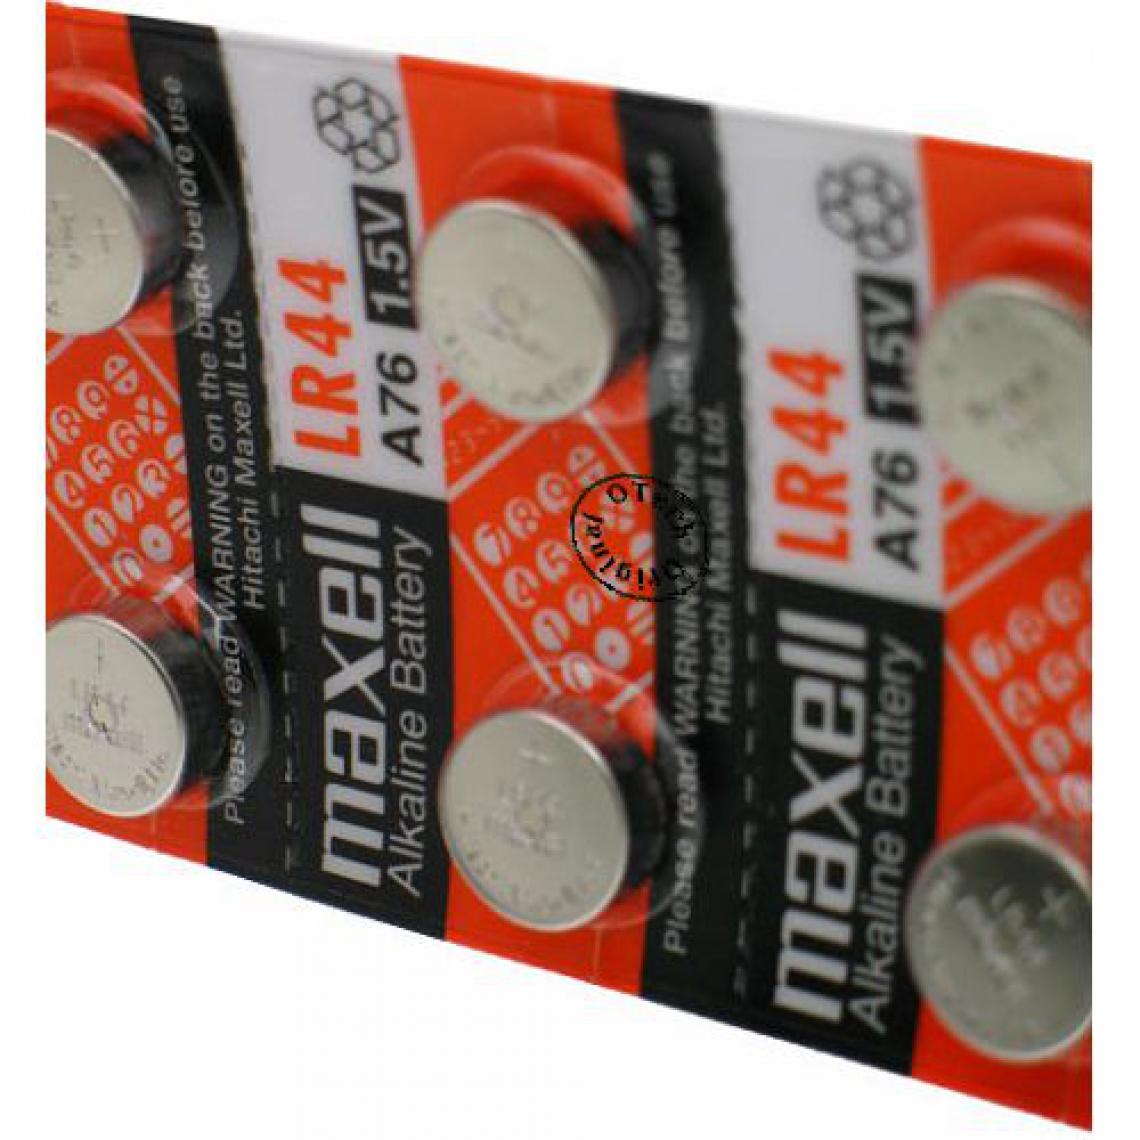 Otech - Pack de 10 piles maxell pour MAXELL MR44 - Piles rechargeables